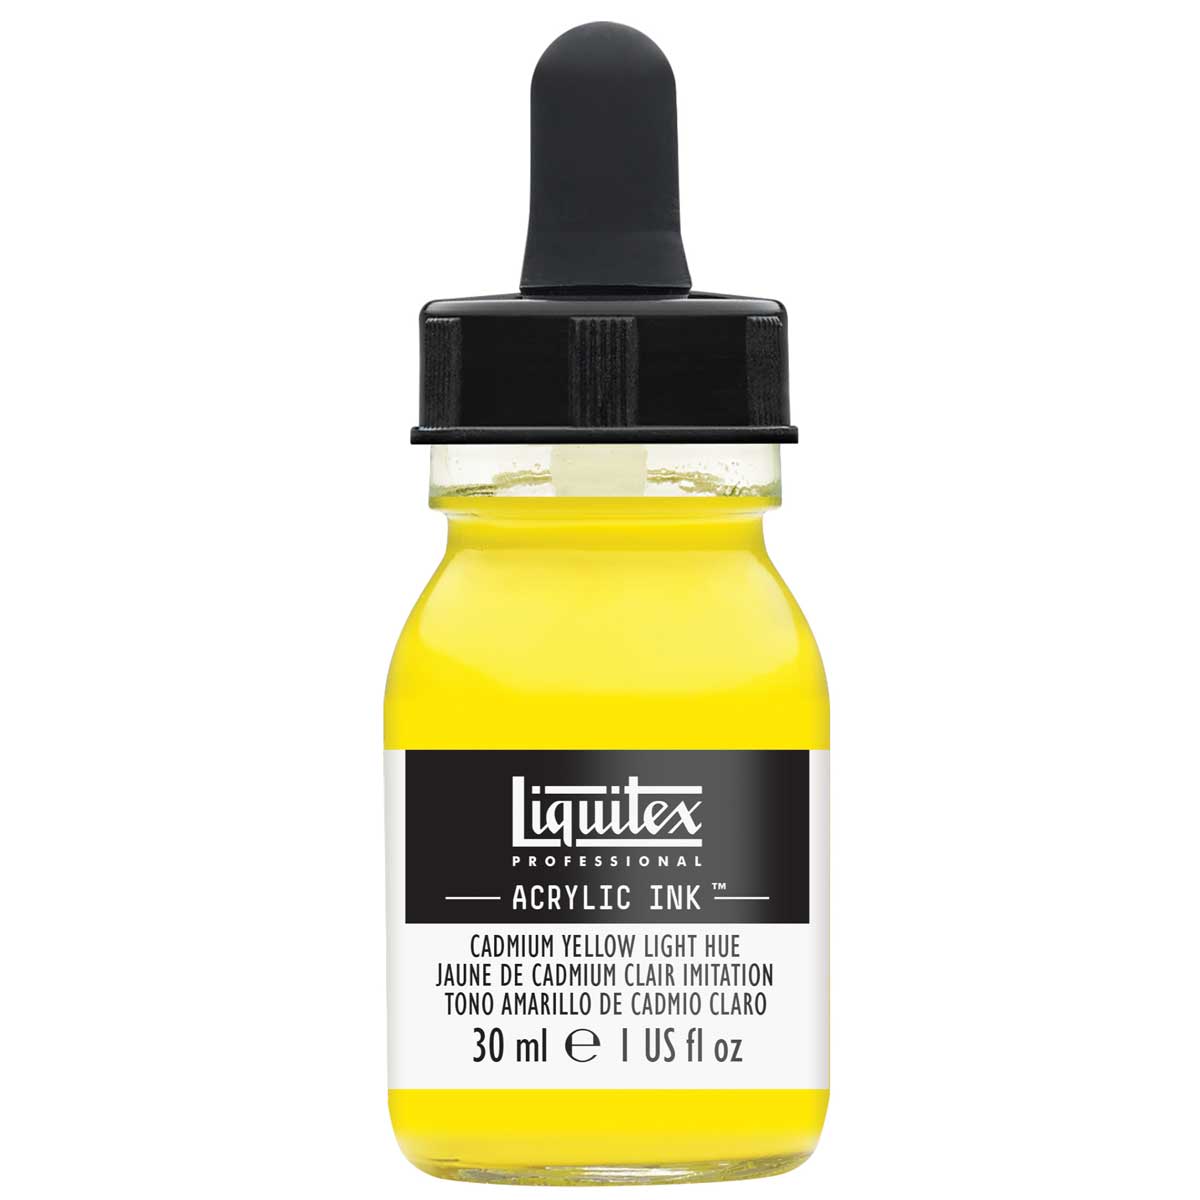 Liquitex Professional Acrylic Ink - Cadmium Yellow Light Hue 30ml/1oz